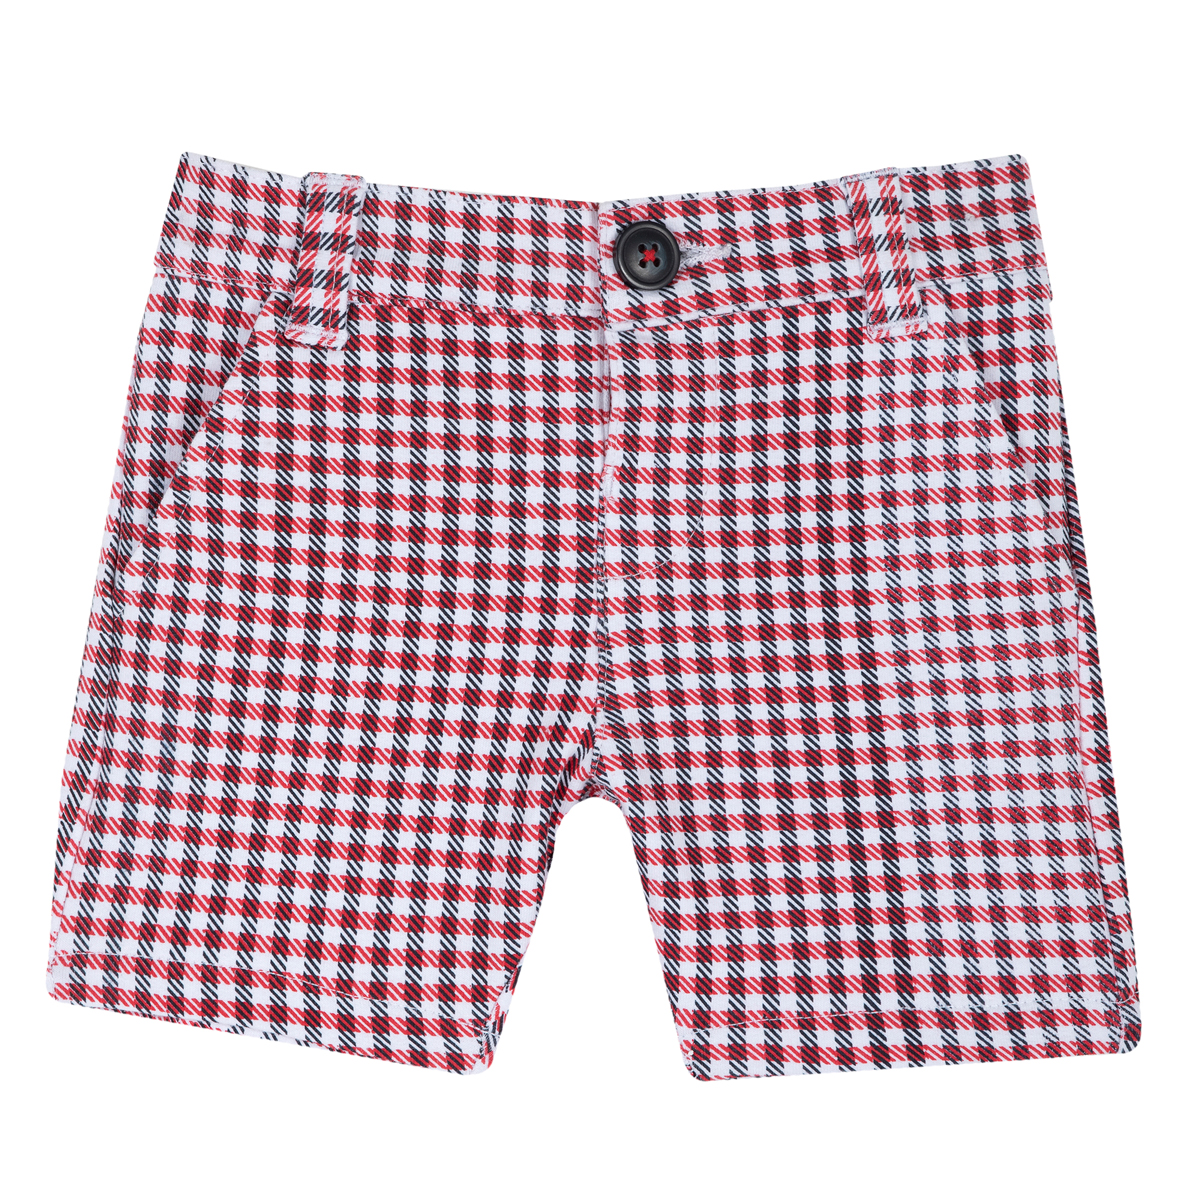 Pantalon scurt pentru copii, Chicco, rosu cu alb, 52865 chicco.ro